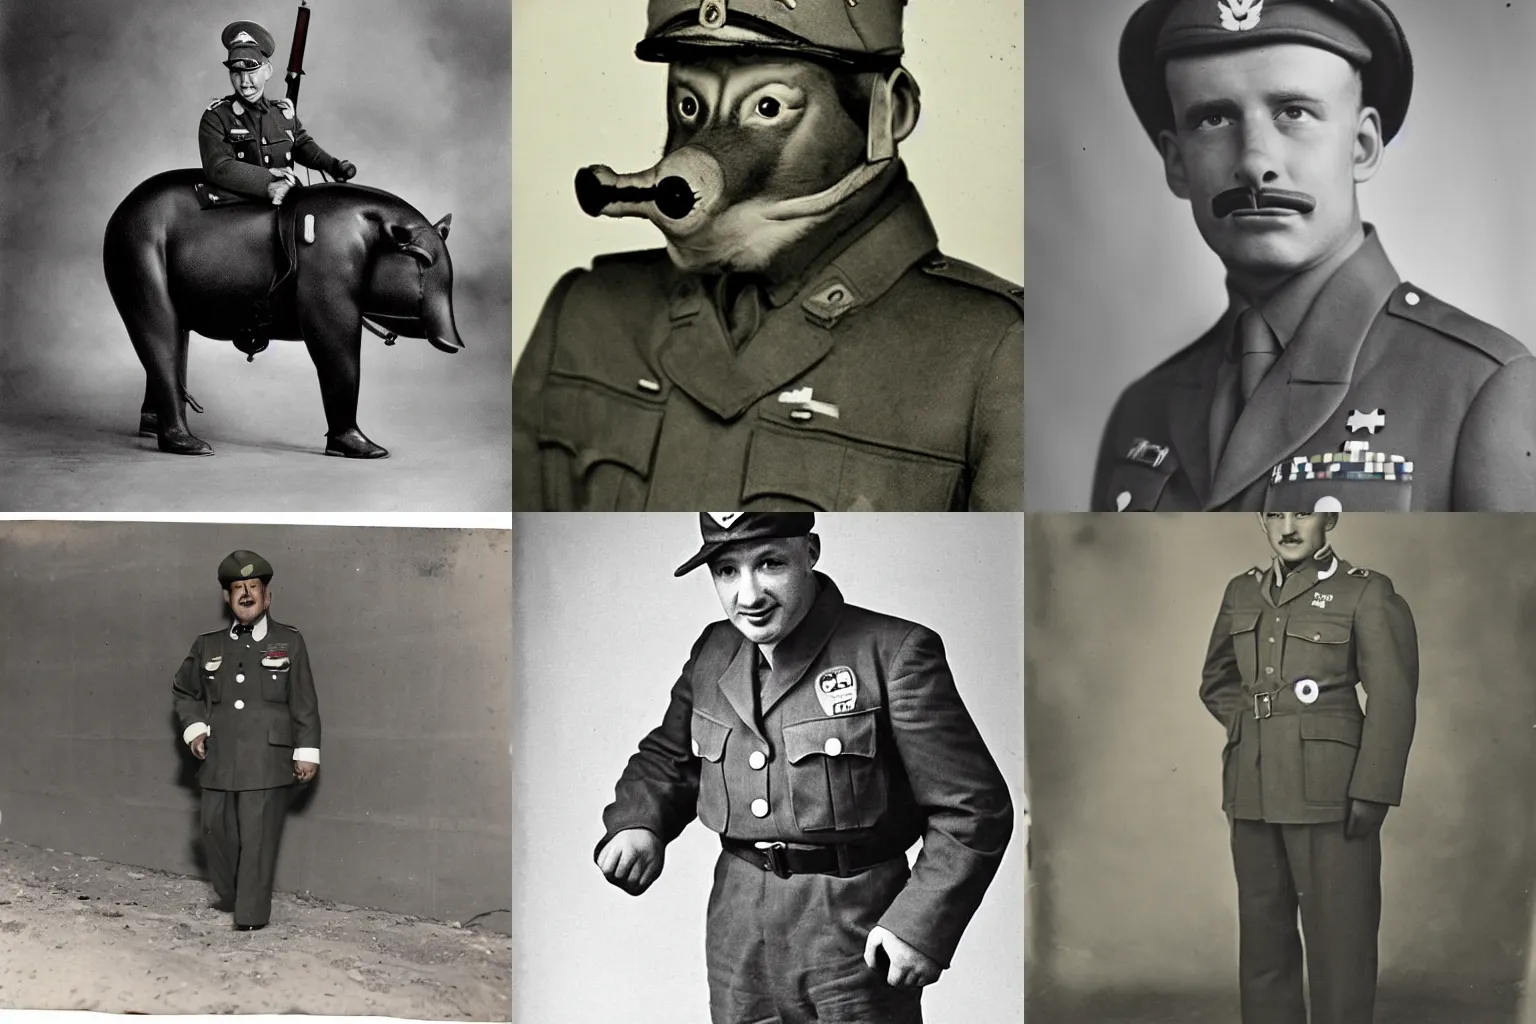 Prompt: anthropomorphic tapir wearing military uniform world war ii photograph